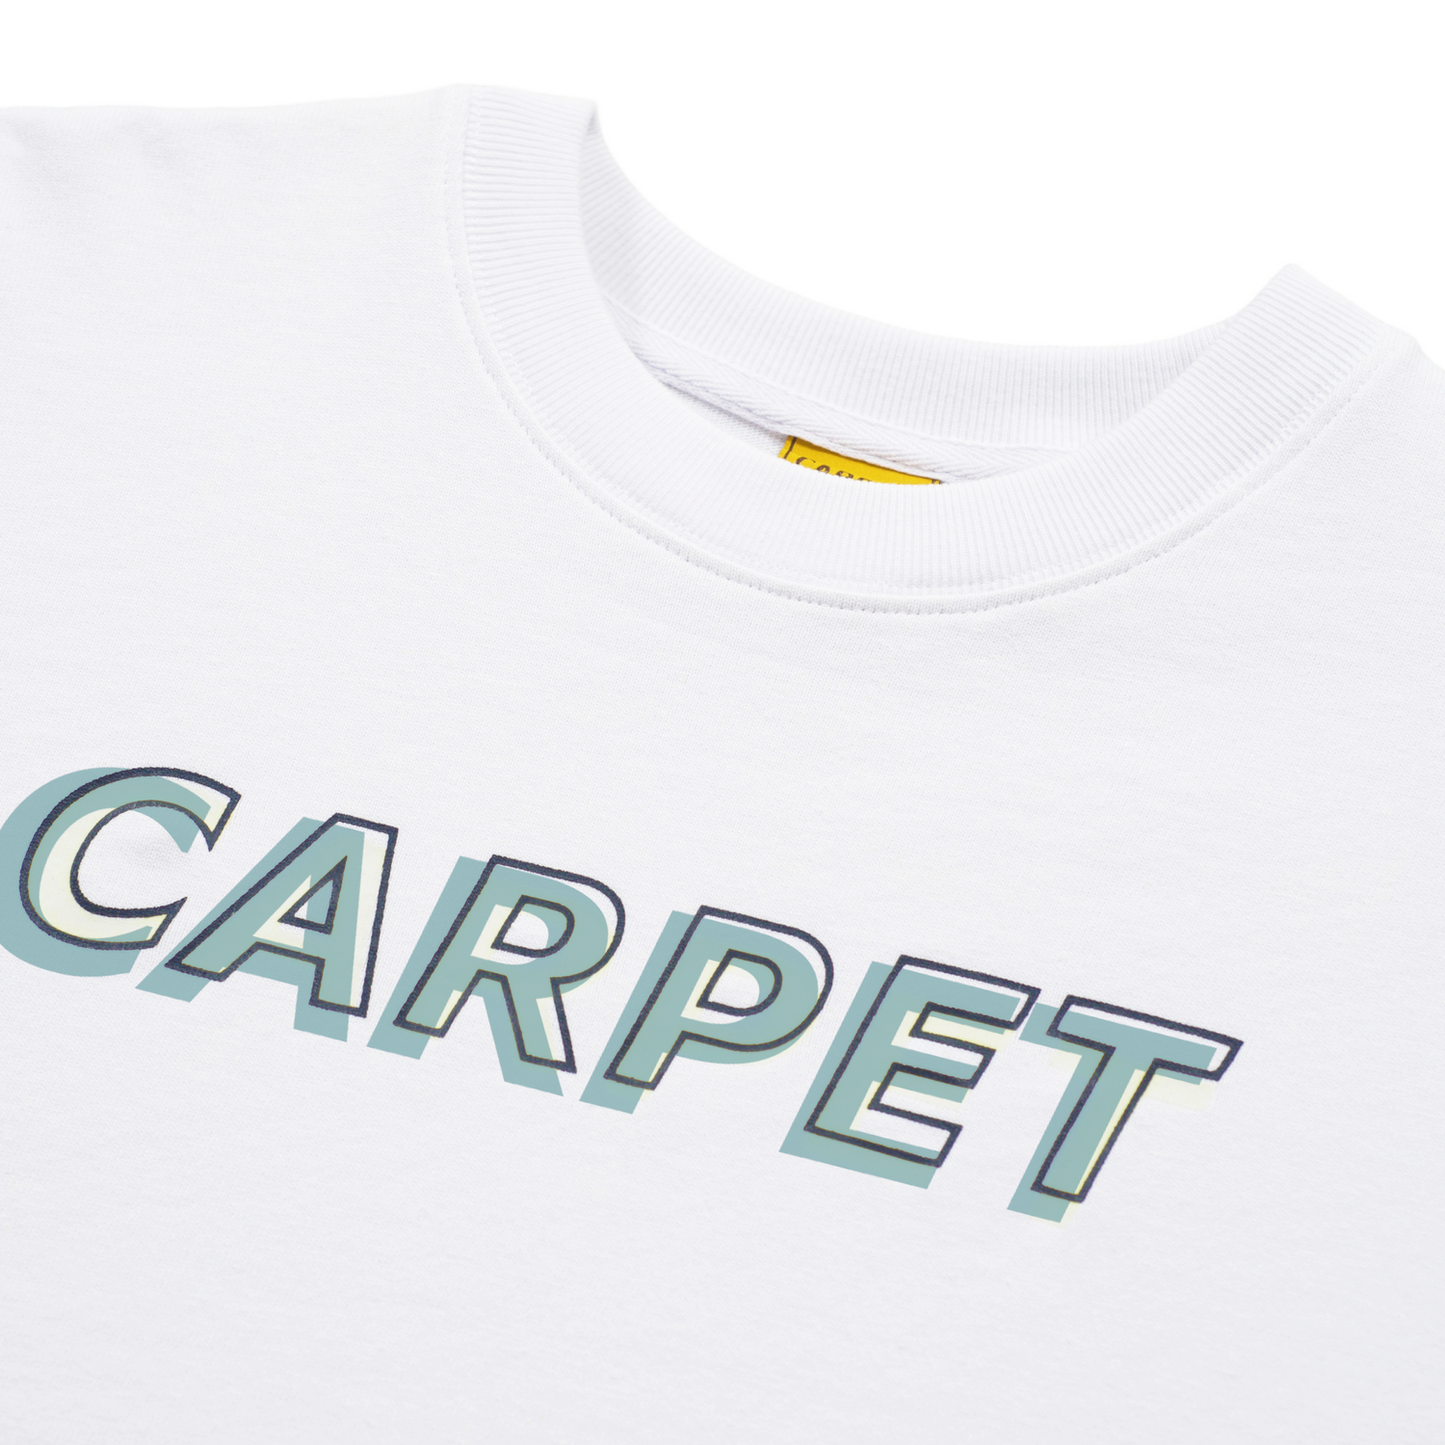 Carpet Co Misprint UV Tee White